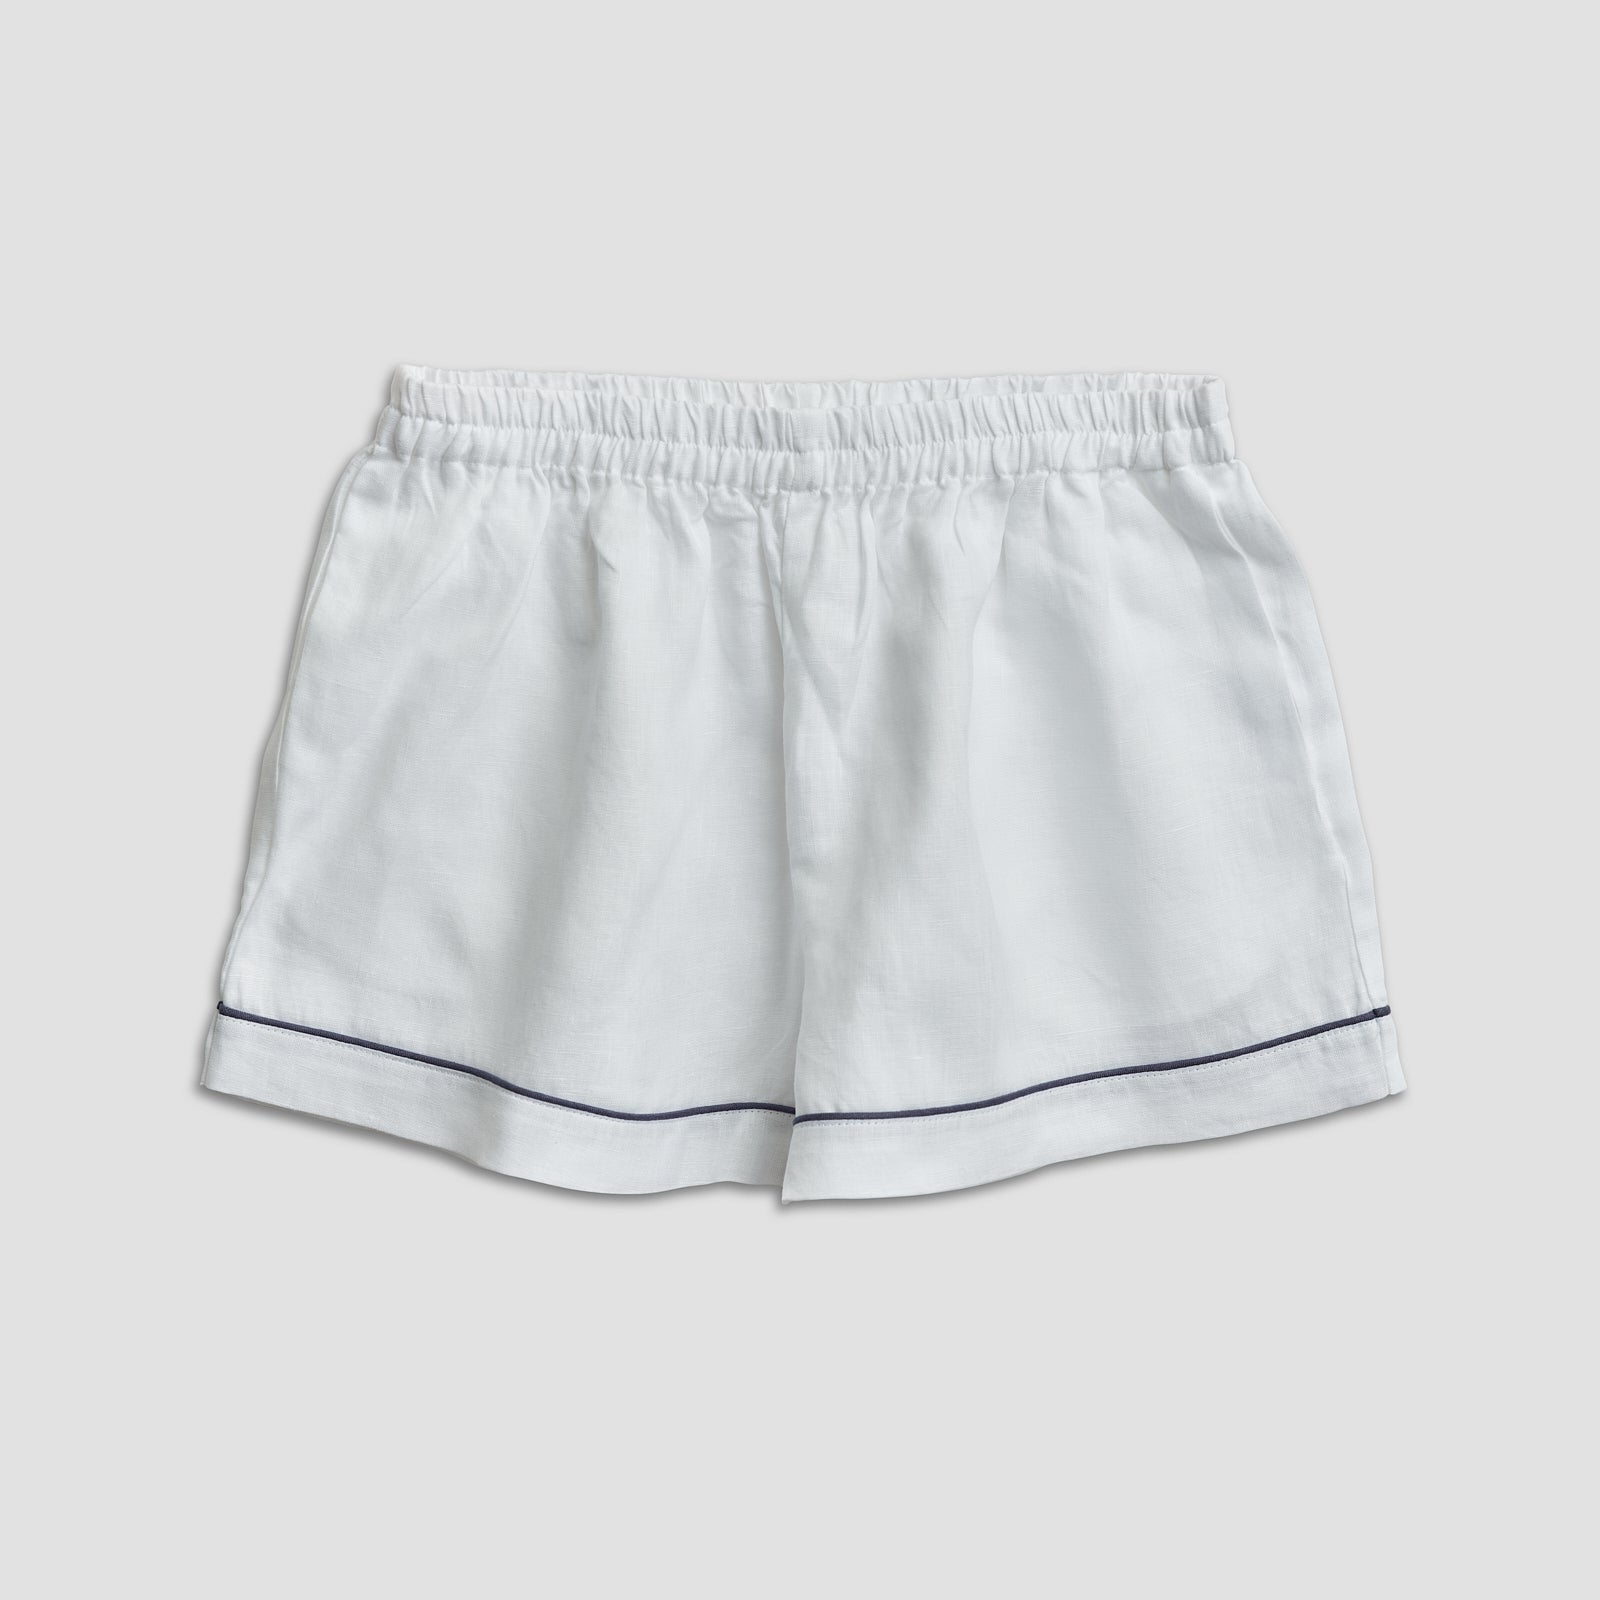 White Linen Pyjama Shorts Set